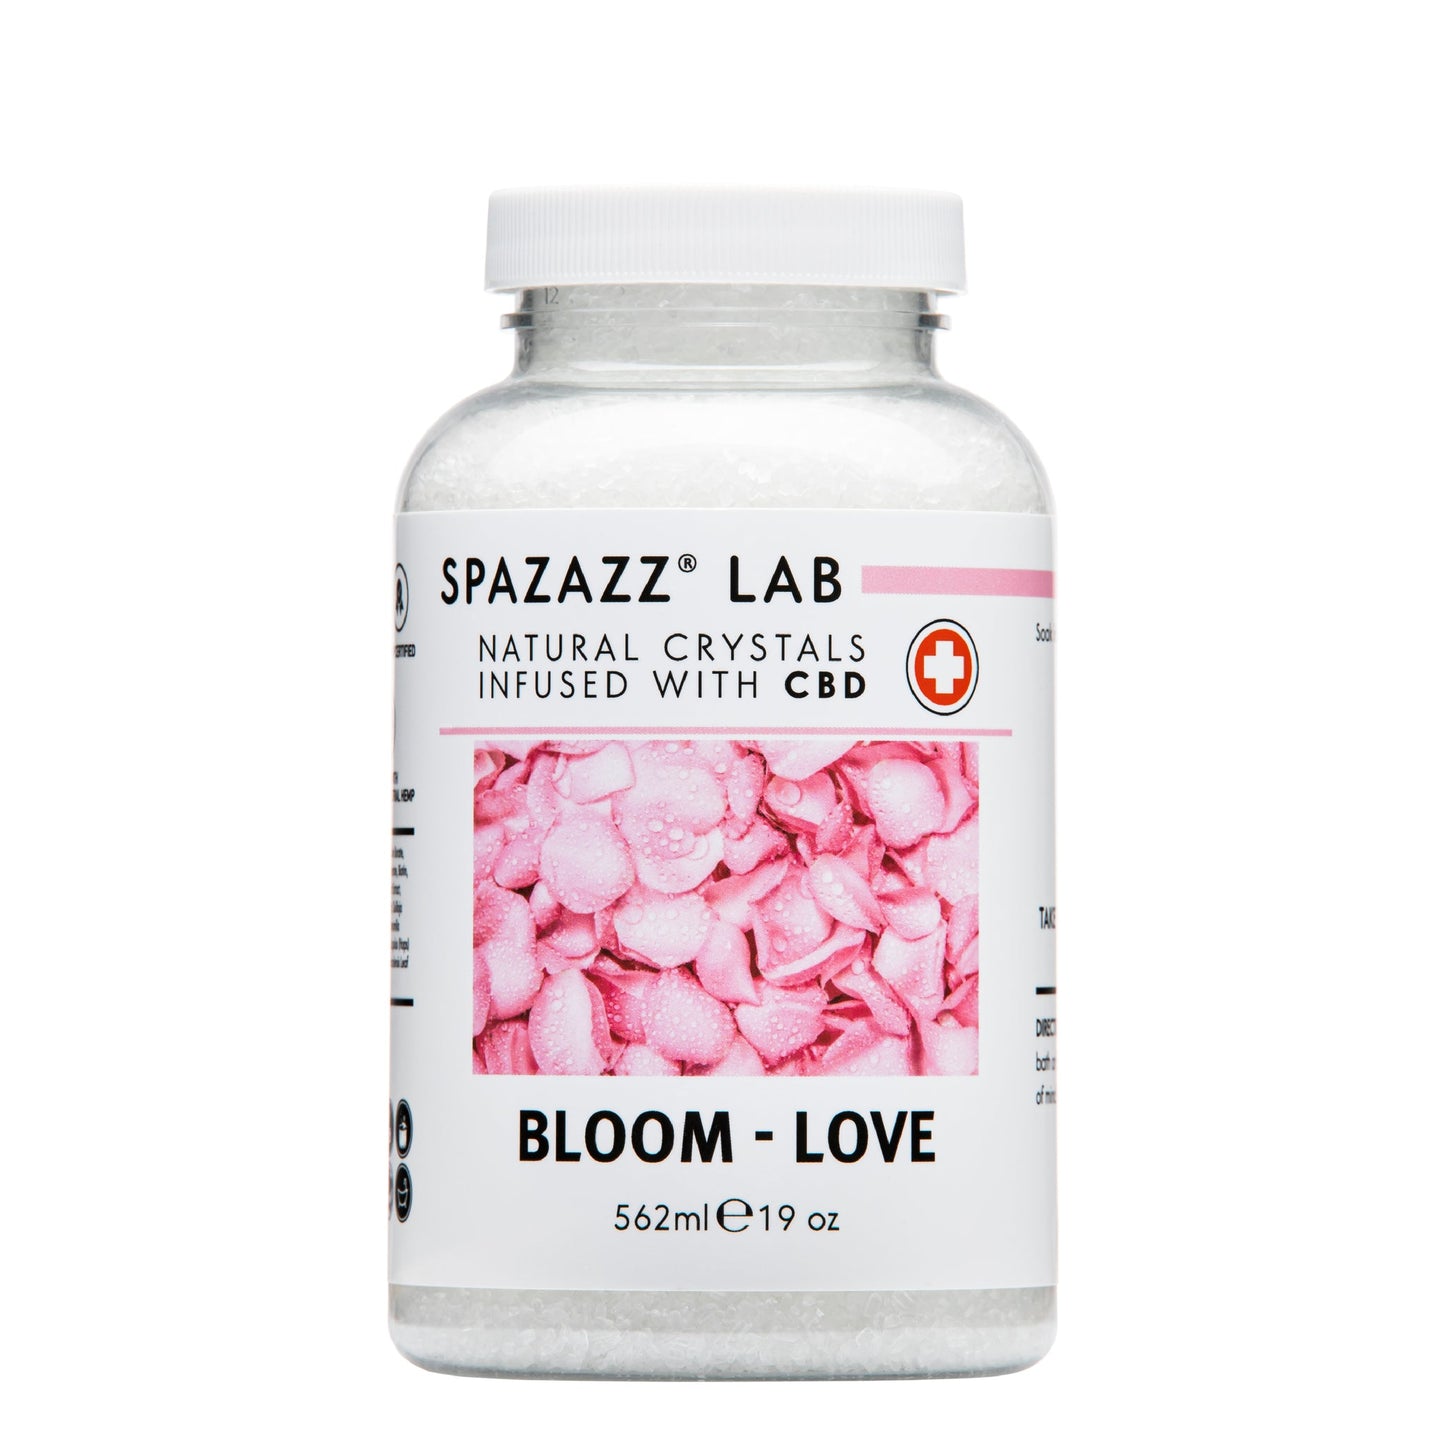 Spazazz Lab Bloom – Love